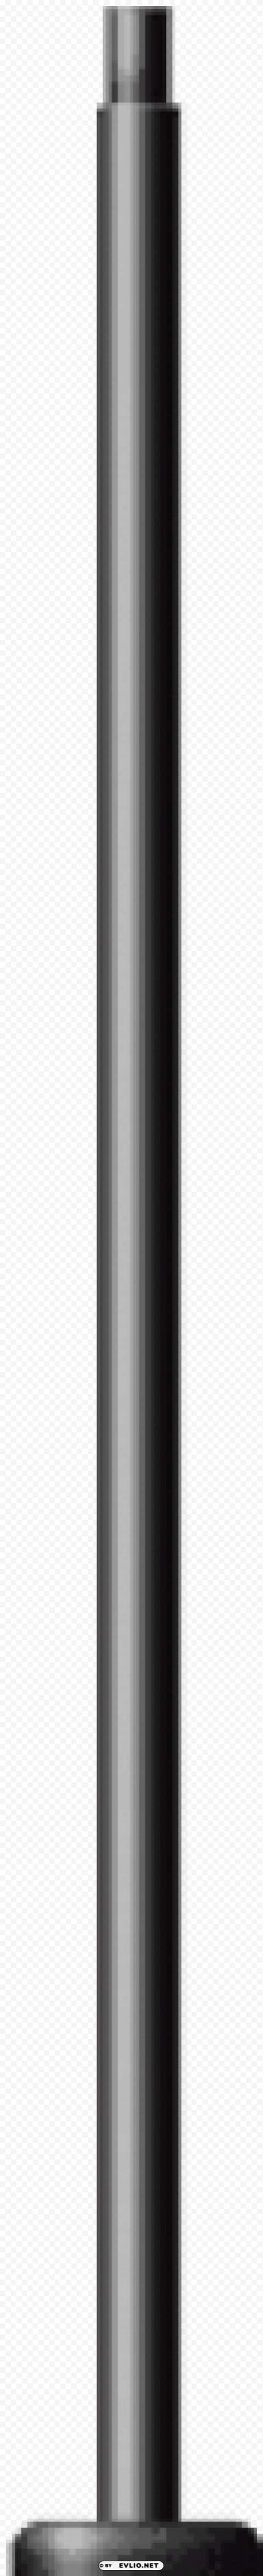 aluminum pole Transparent PNG Isolation of Item